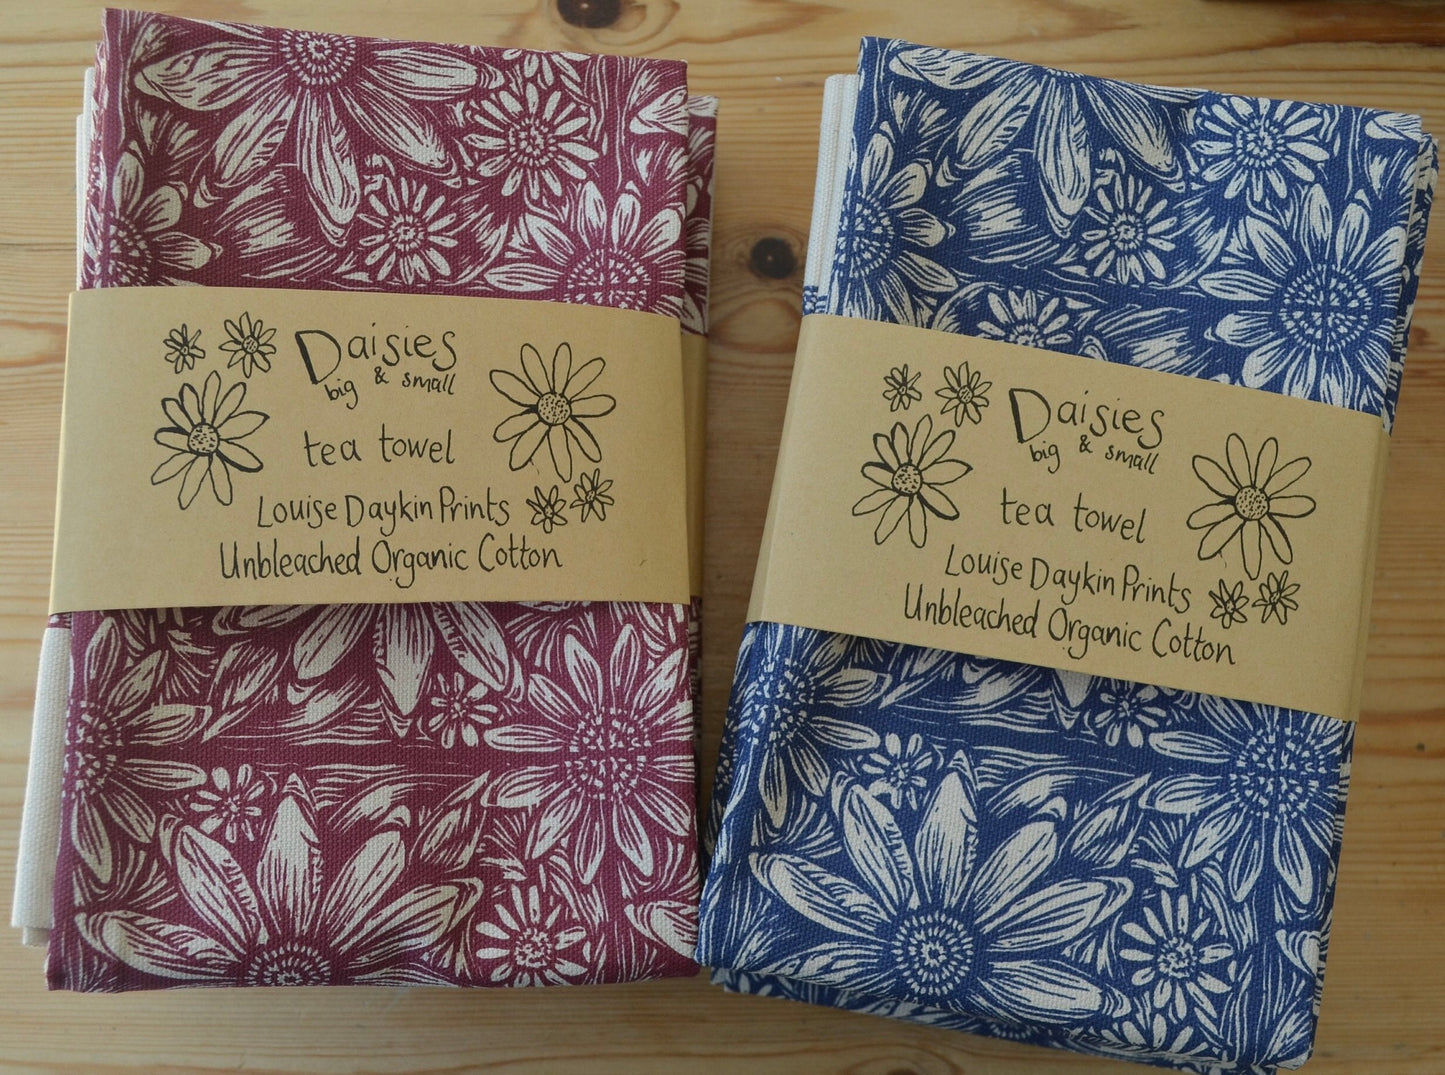 "Daisies Big and Small" Organic Cotton Tea Towel